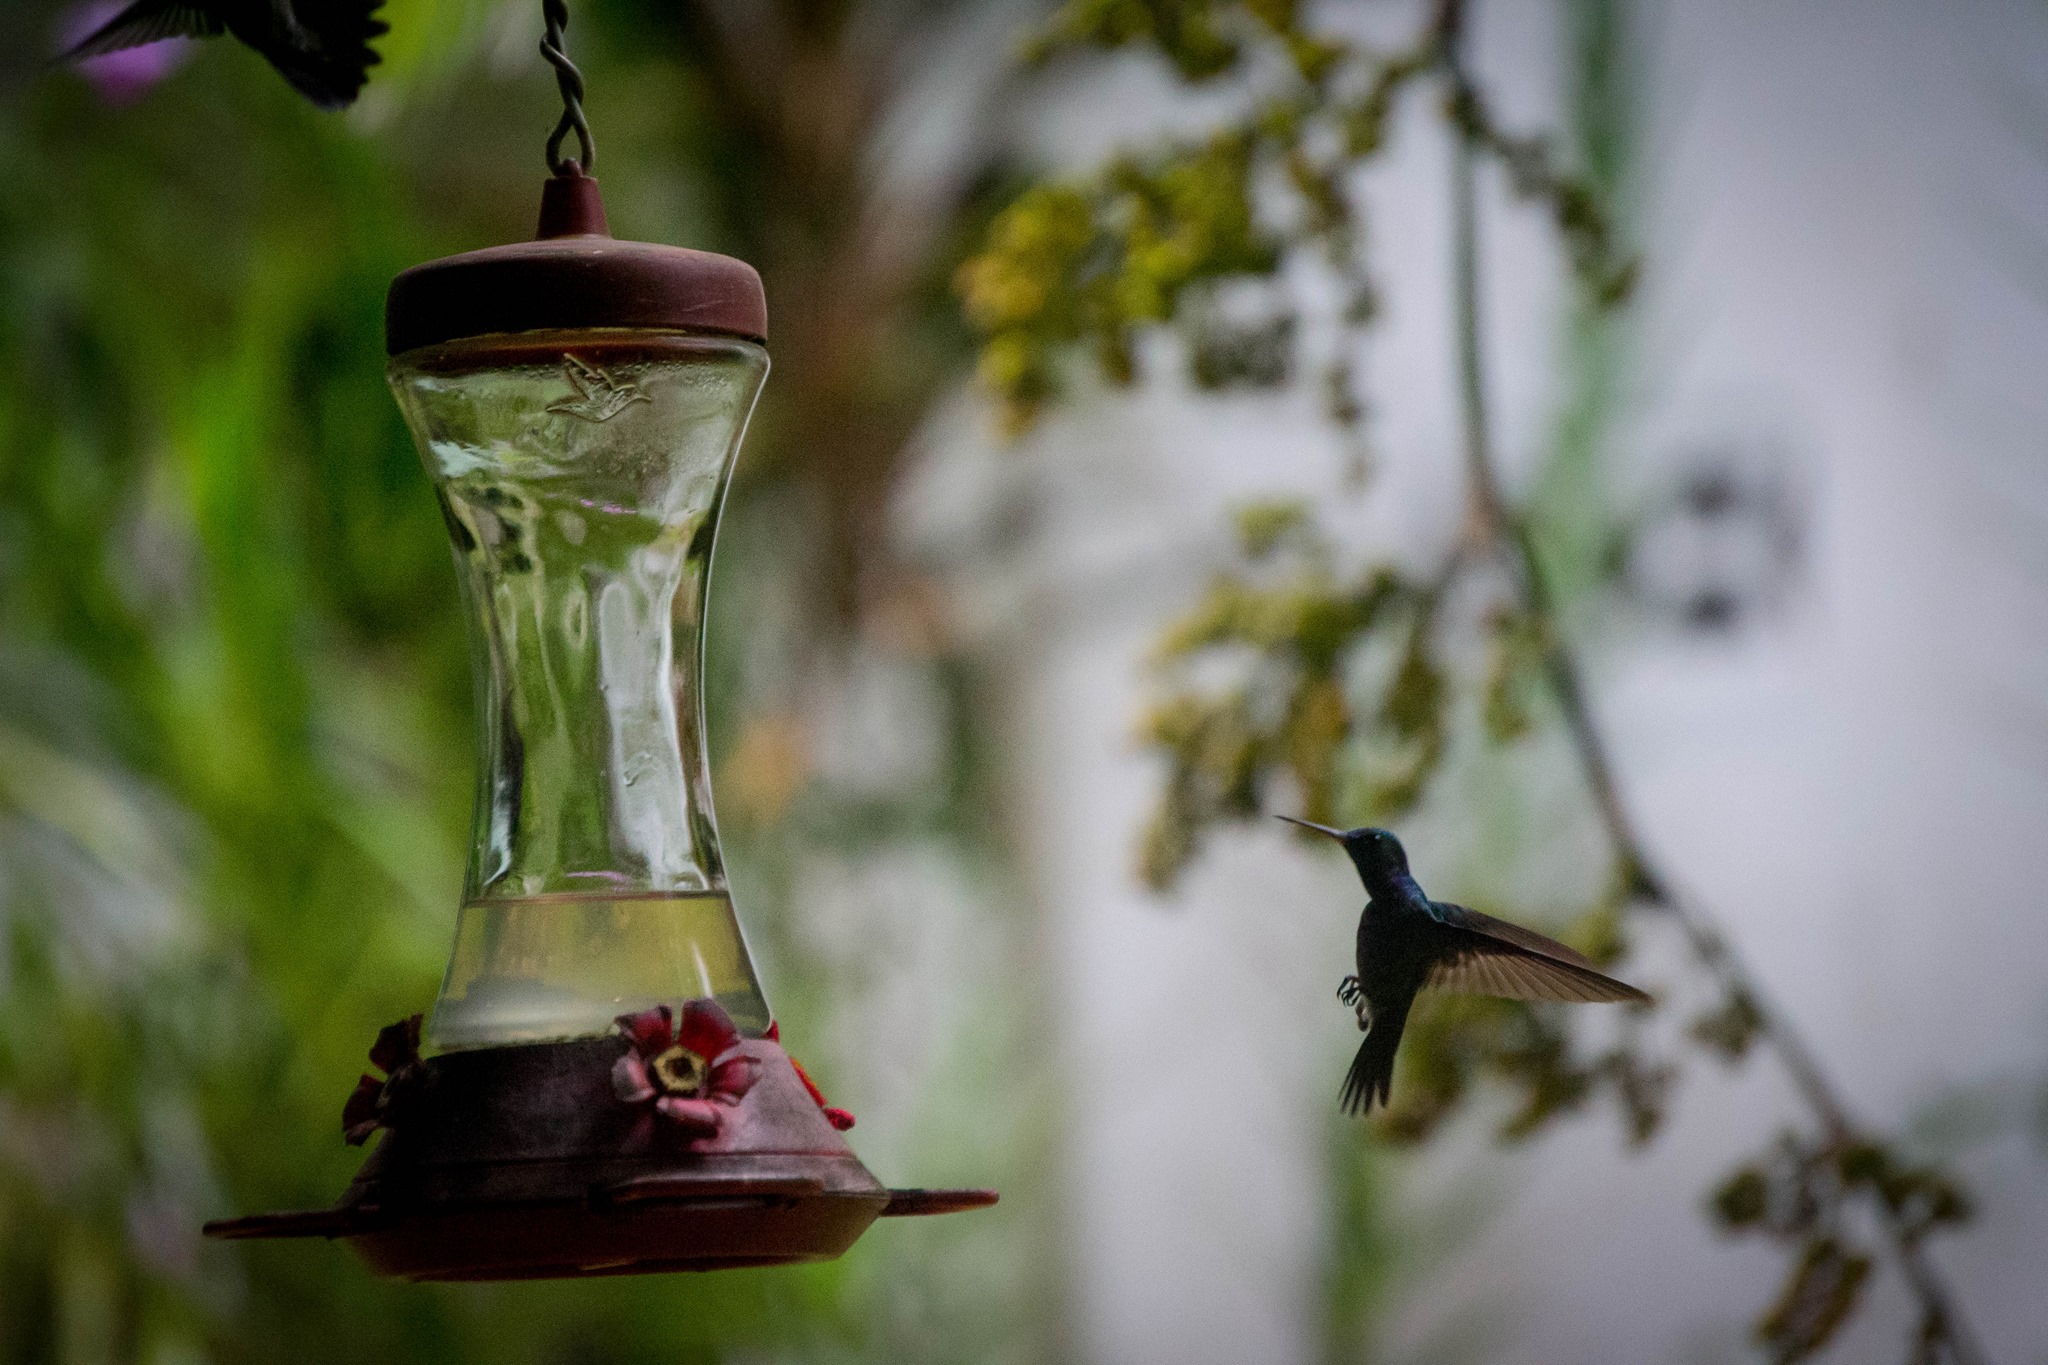 a hummingbird approaches a bird feeder with water hanging